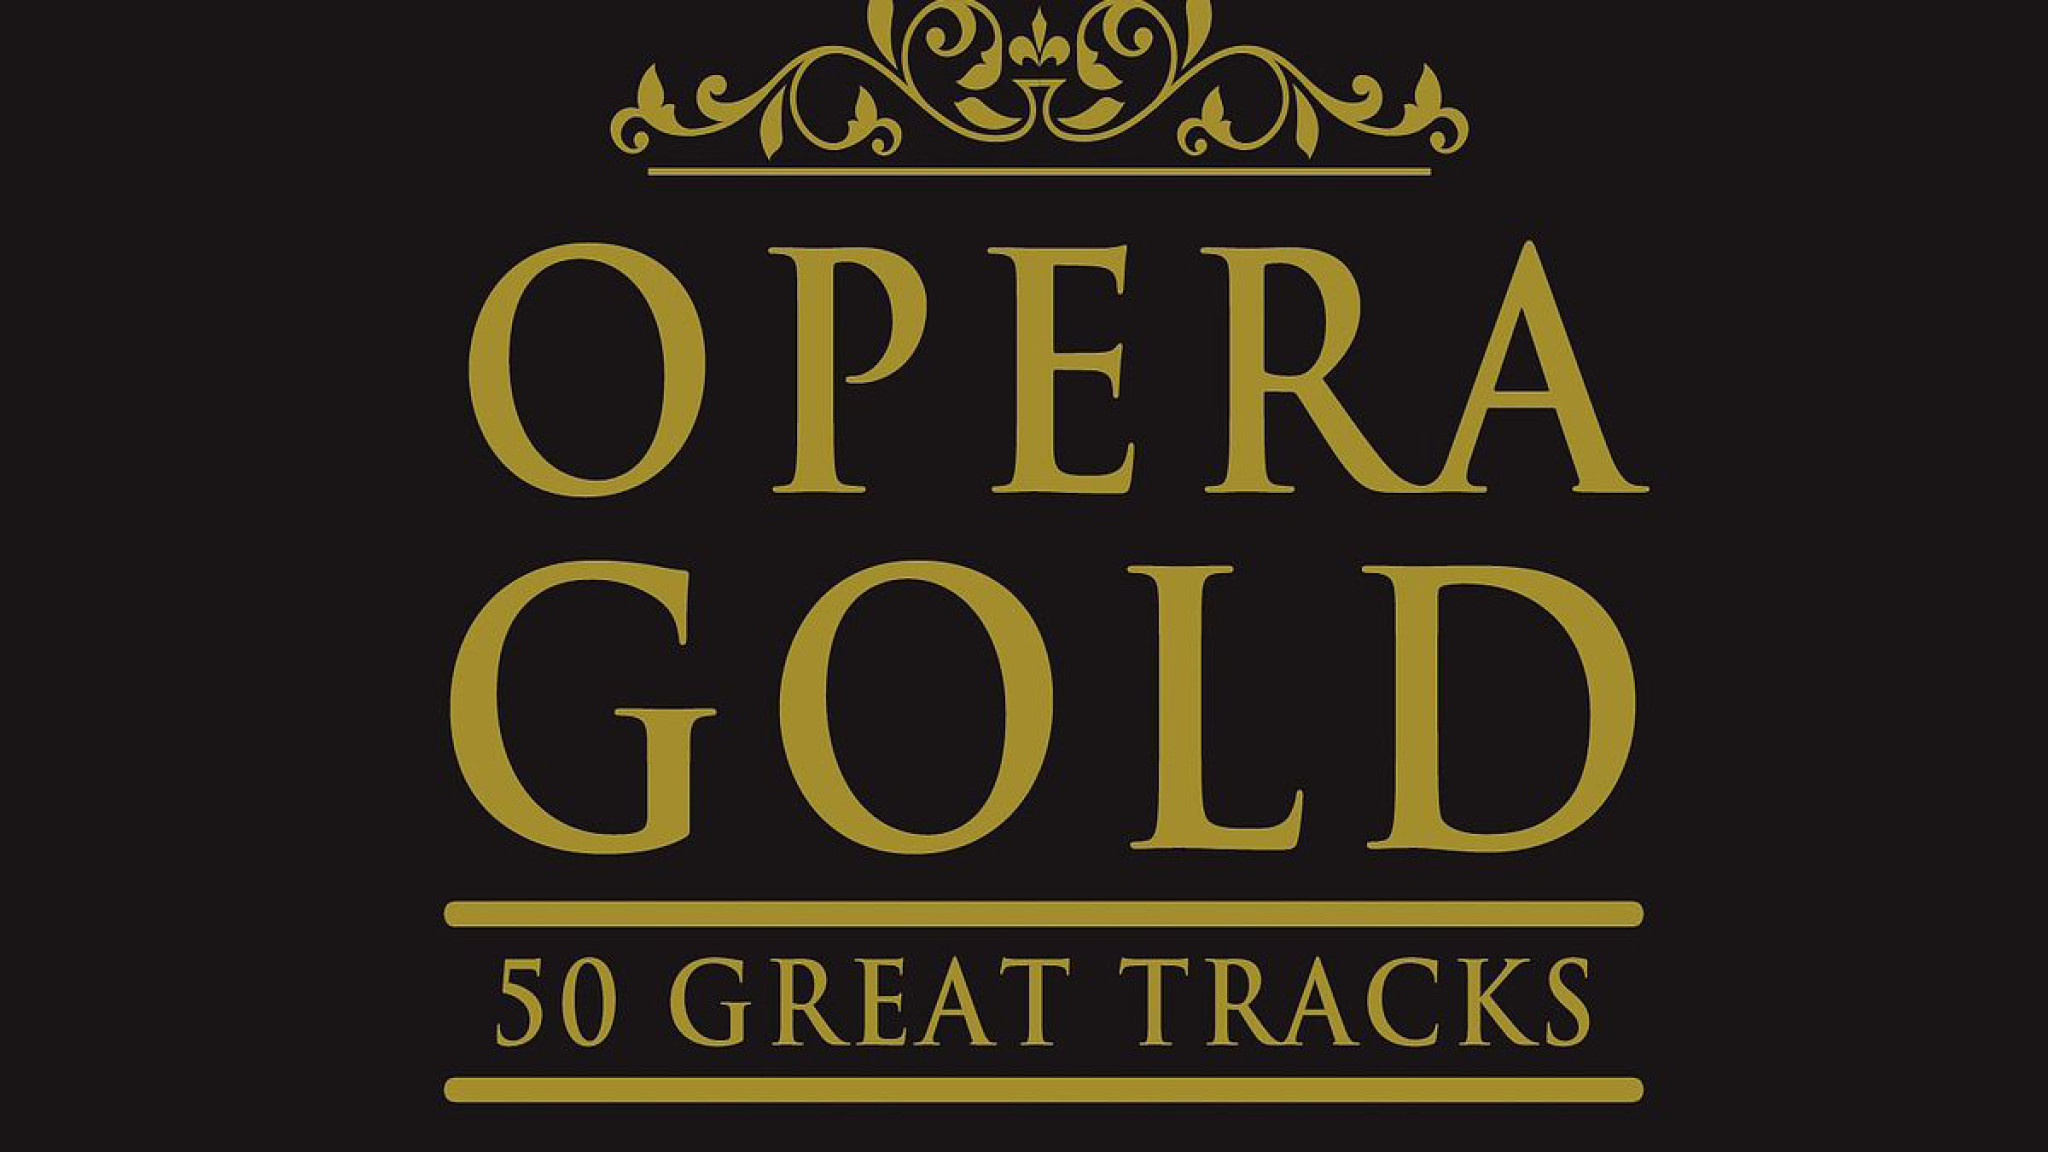 Opera Gold: 50 Great Tracks